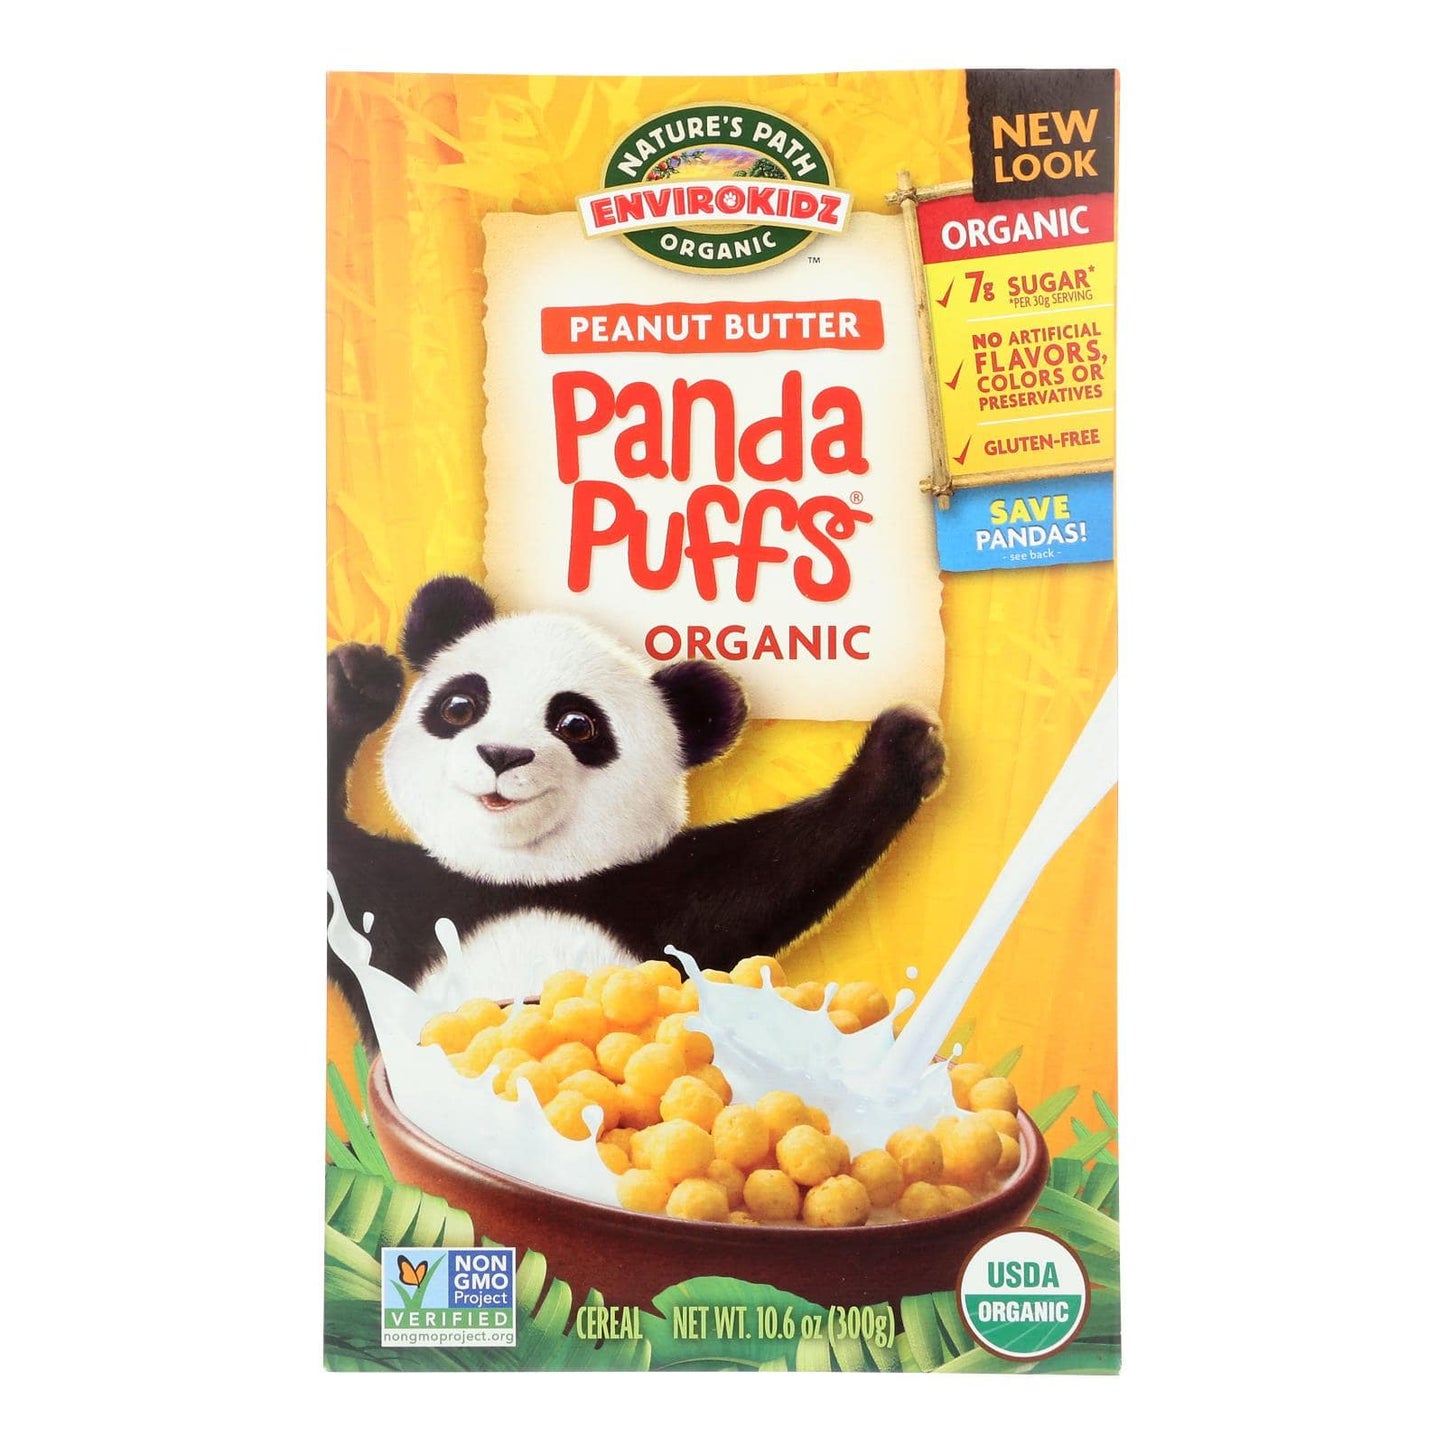 Buy Envirokidz - Organic Panda Puffs - Peanut Butter - Case Of 12 - 10.6 Oz.  at OnlyNaturals.us